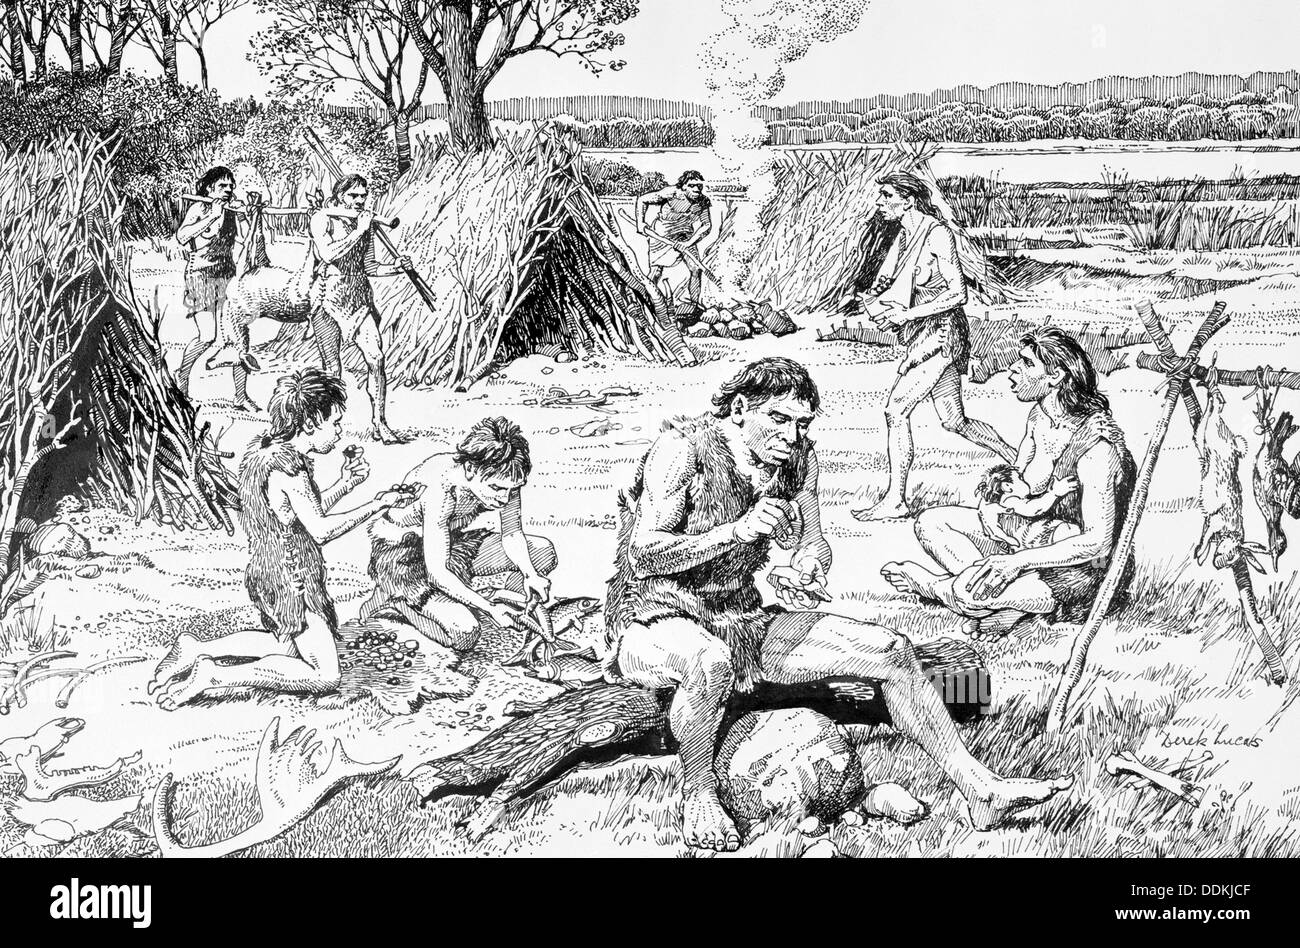 Prehistoric people in a settlement, Swanscombe, Kent, c350,000 BC. Artist: Derek Lucas Stock Photo